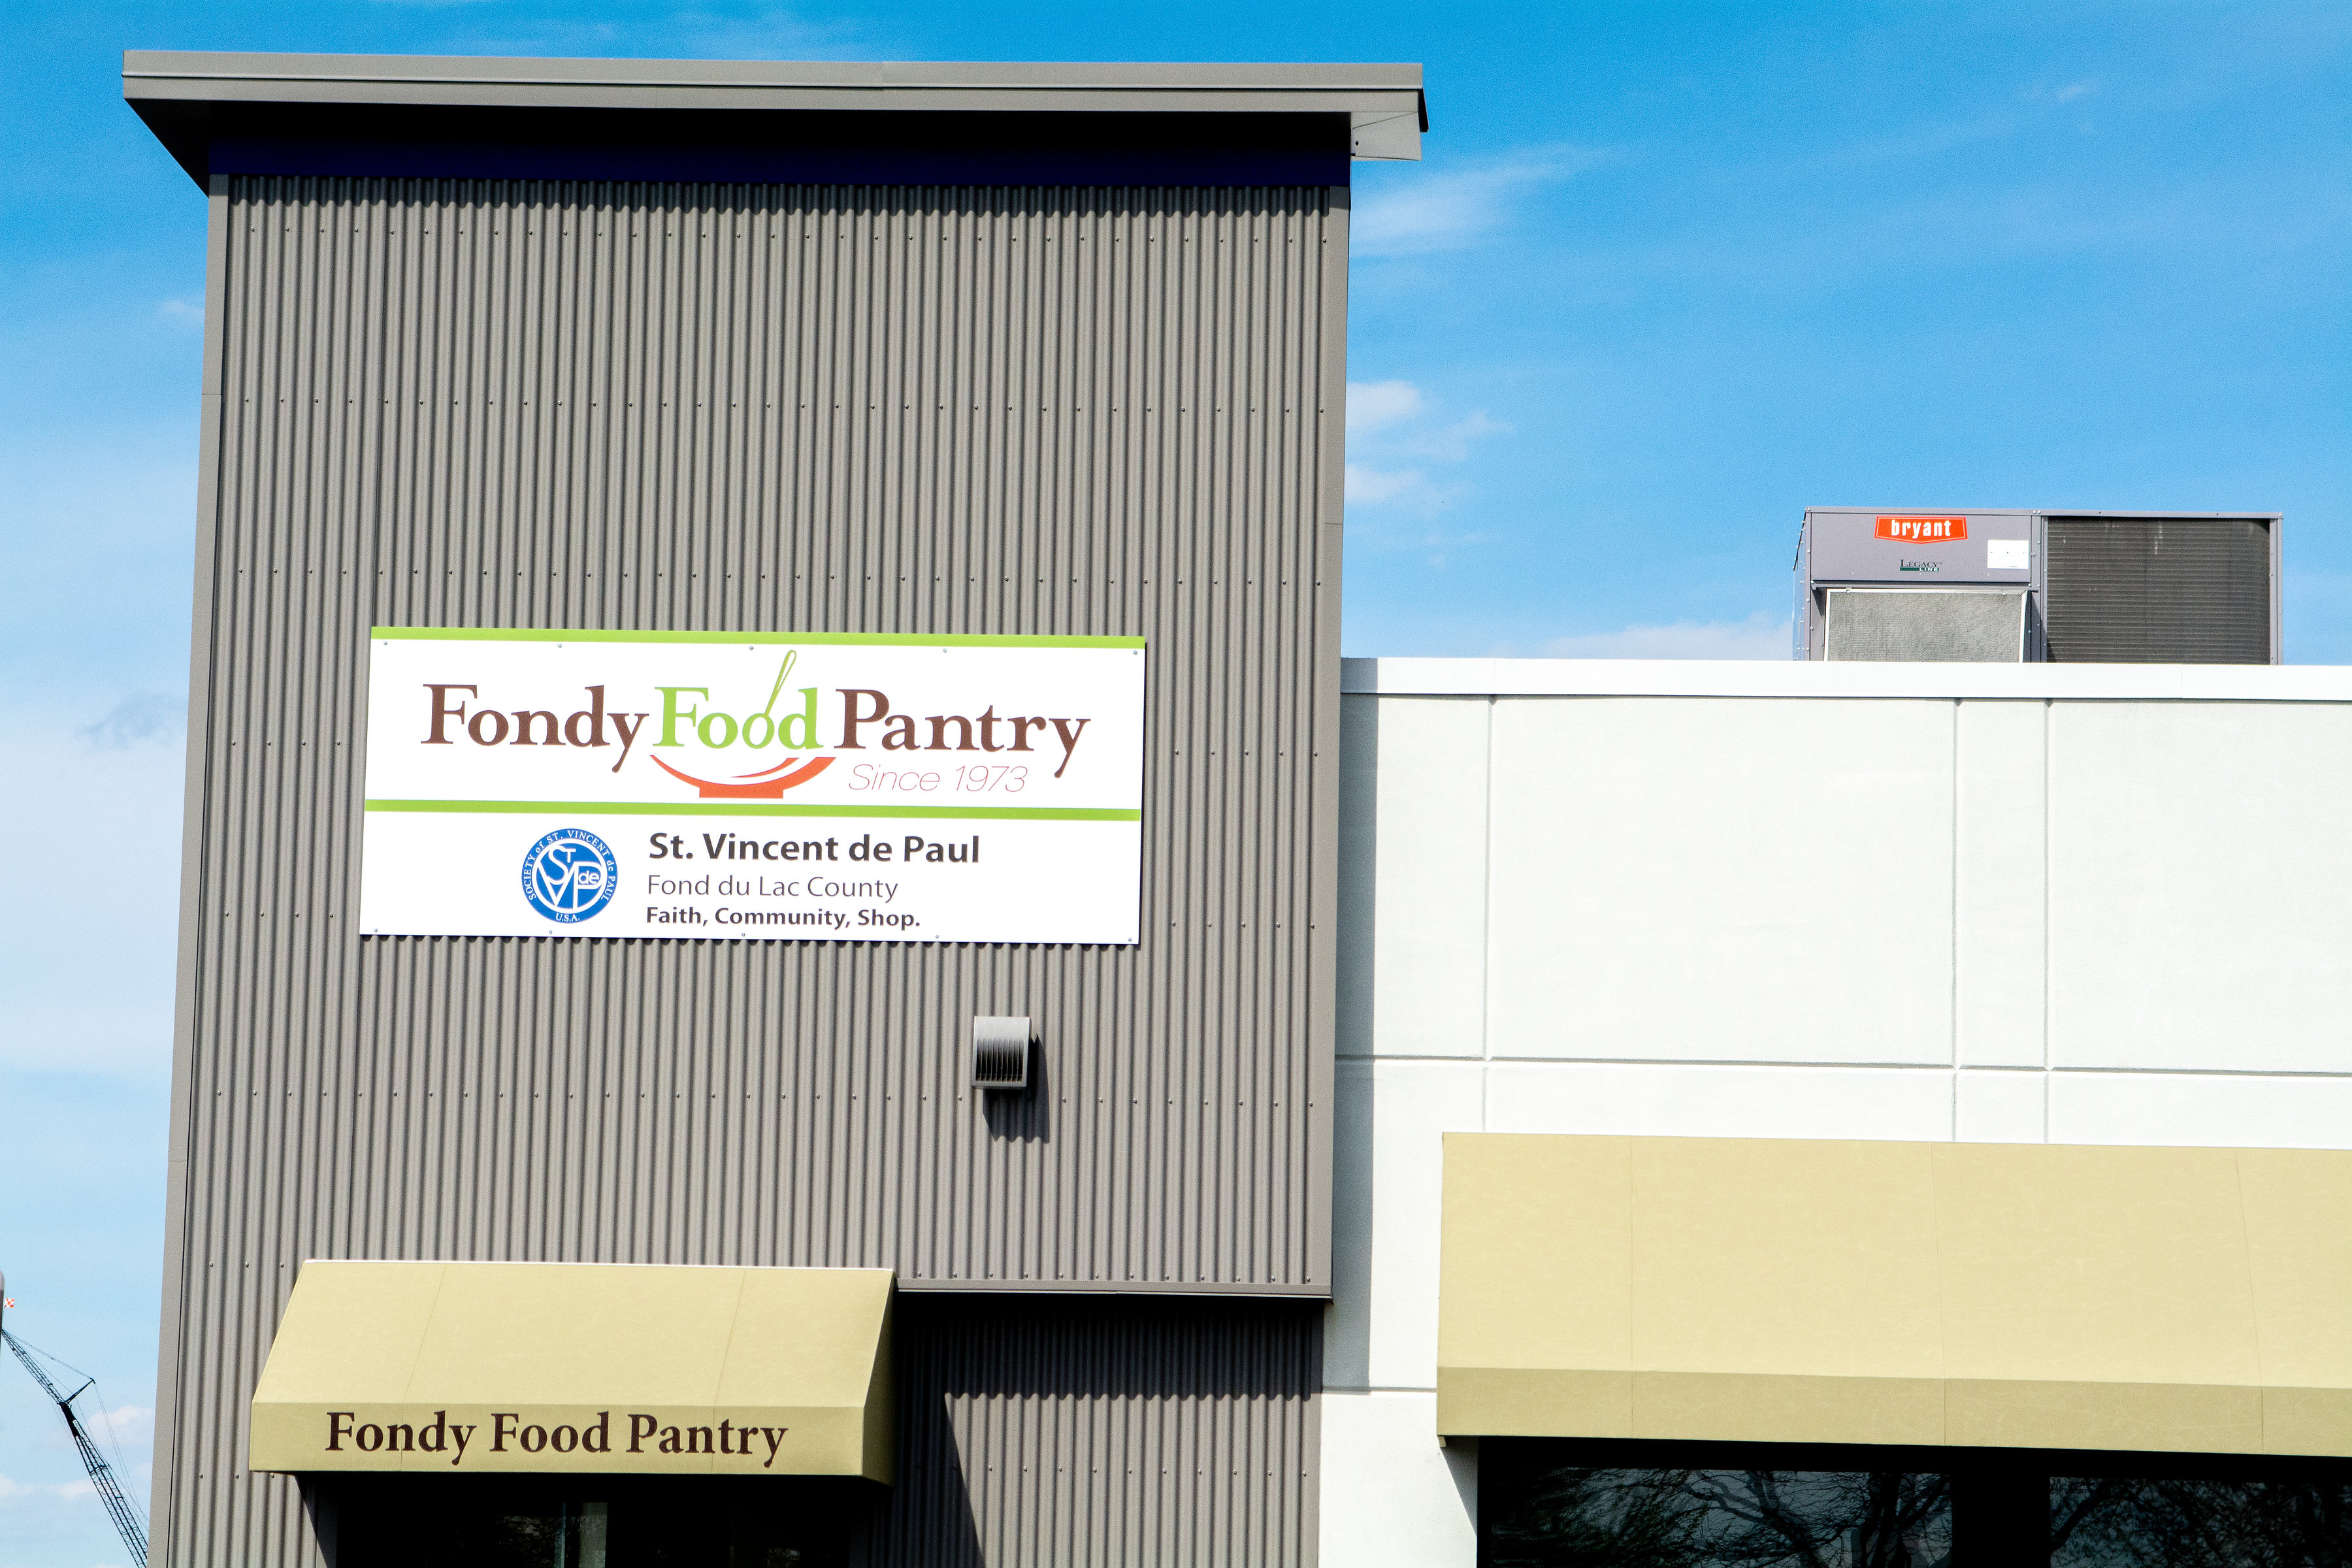 Food Pantry sign